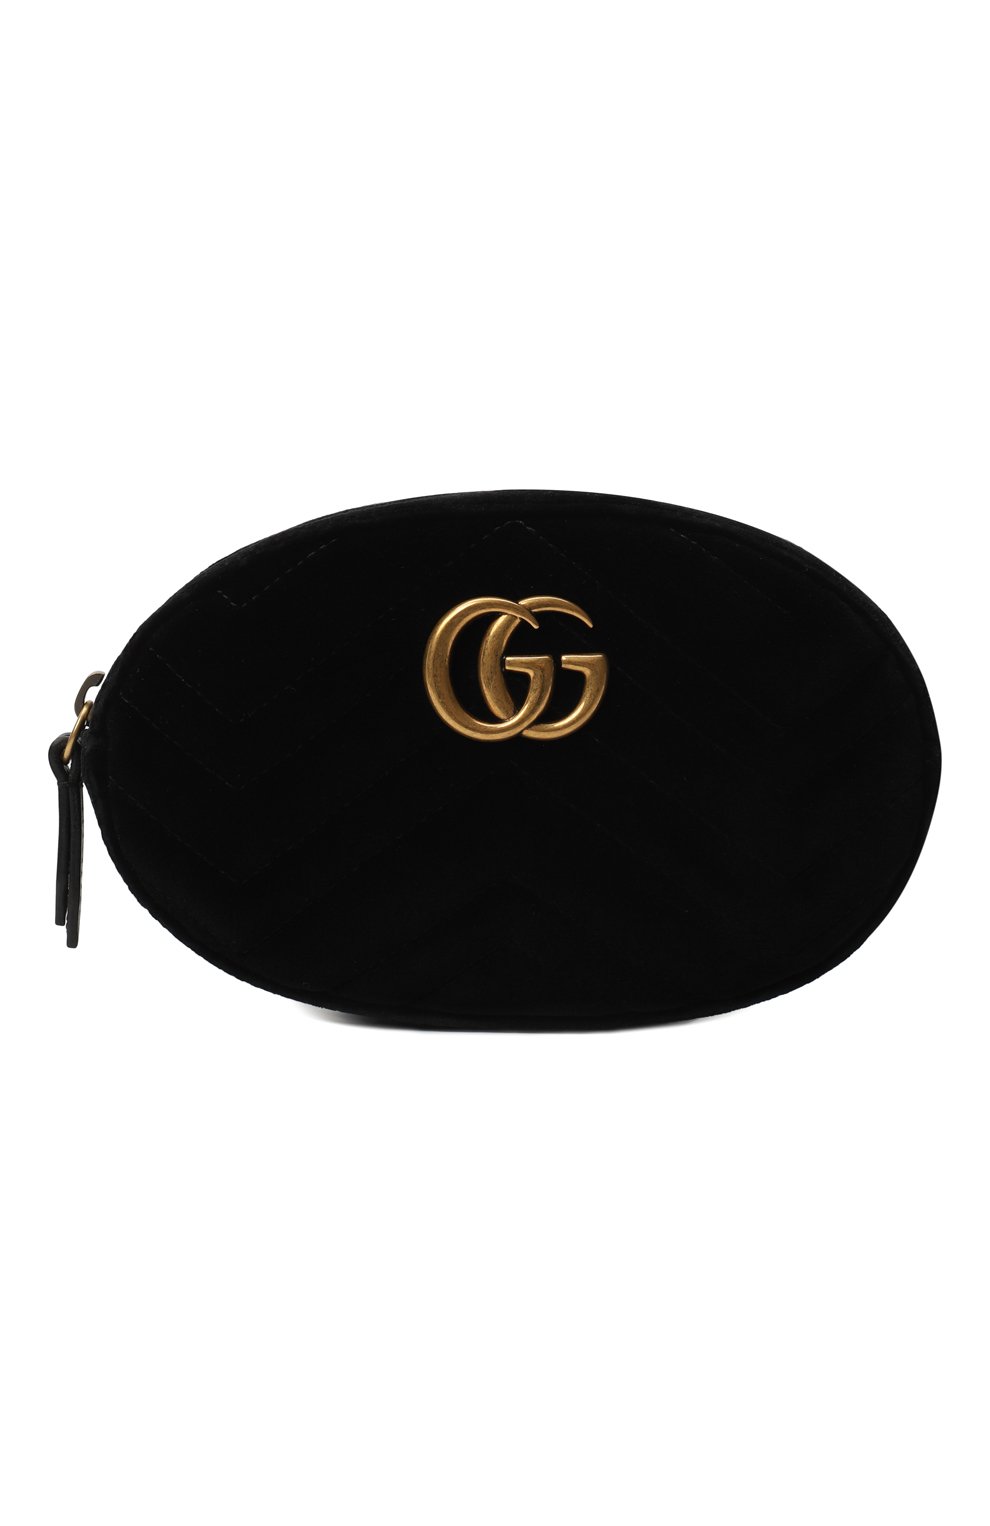 Сумка GG Marmont | Gucci | Чёрный - 1